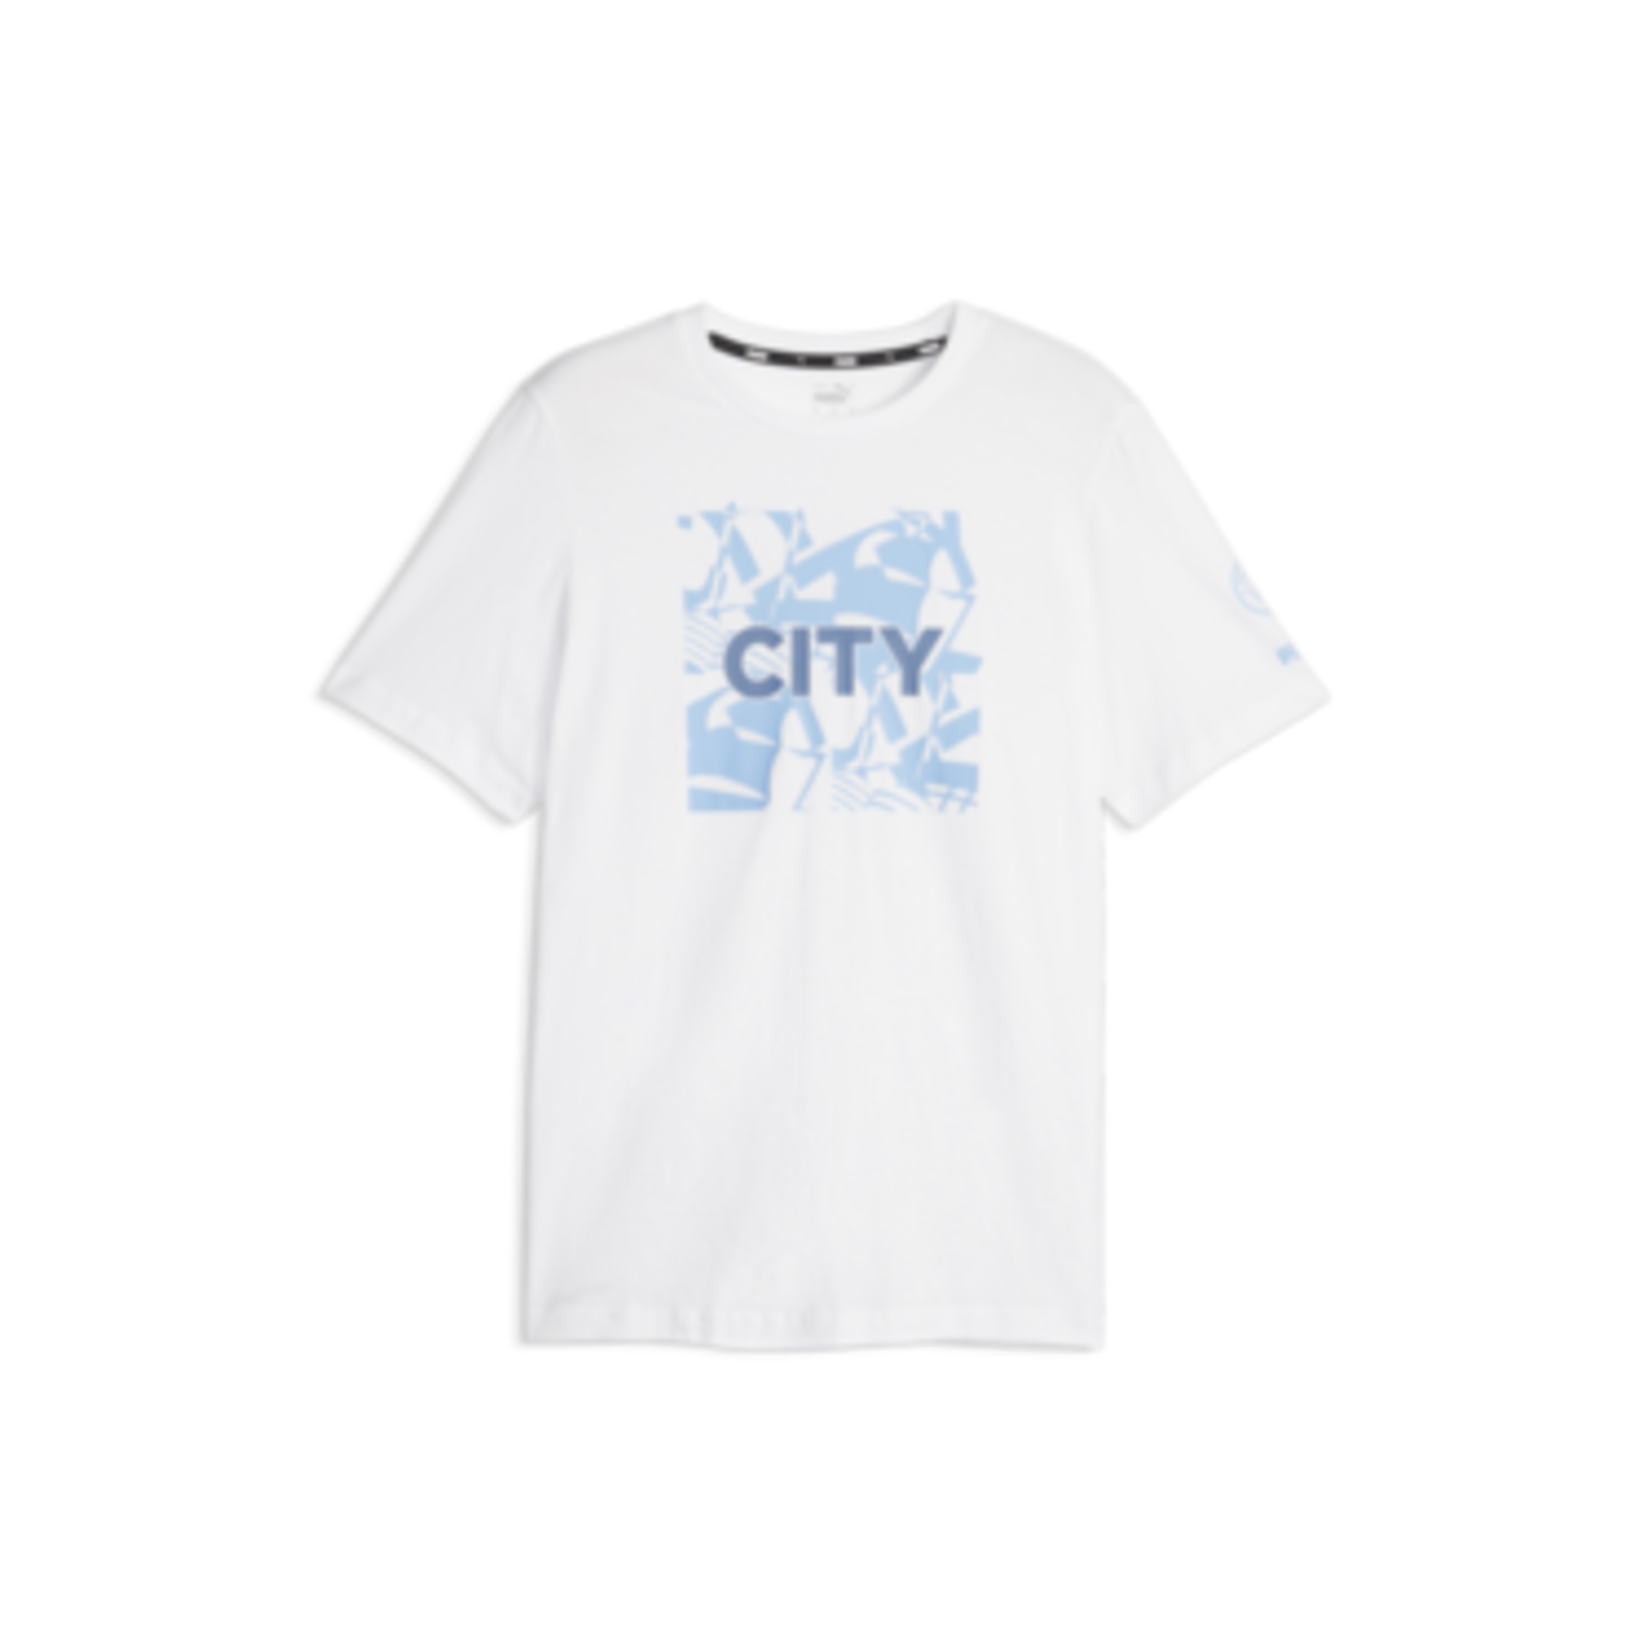 Puma Manchester City FtblCore Graphic T-Shirt - 772950 04